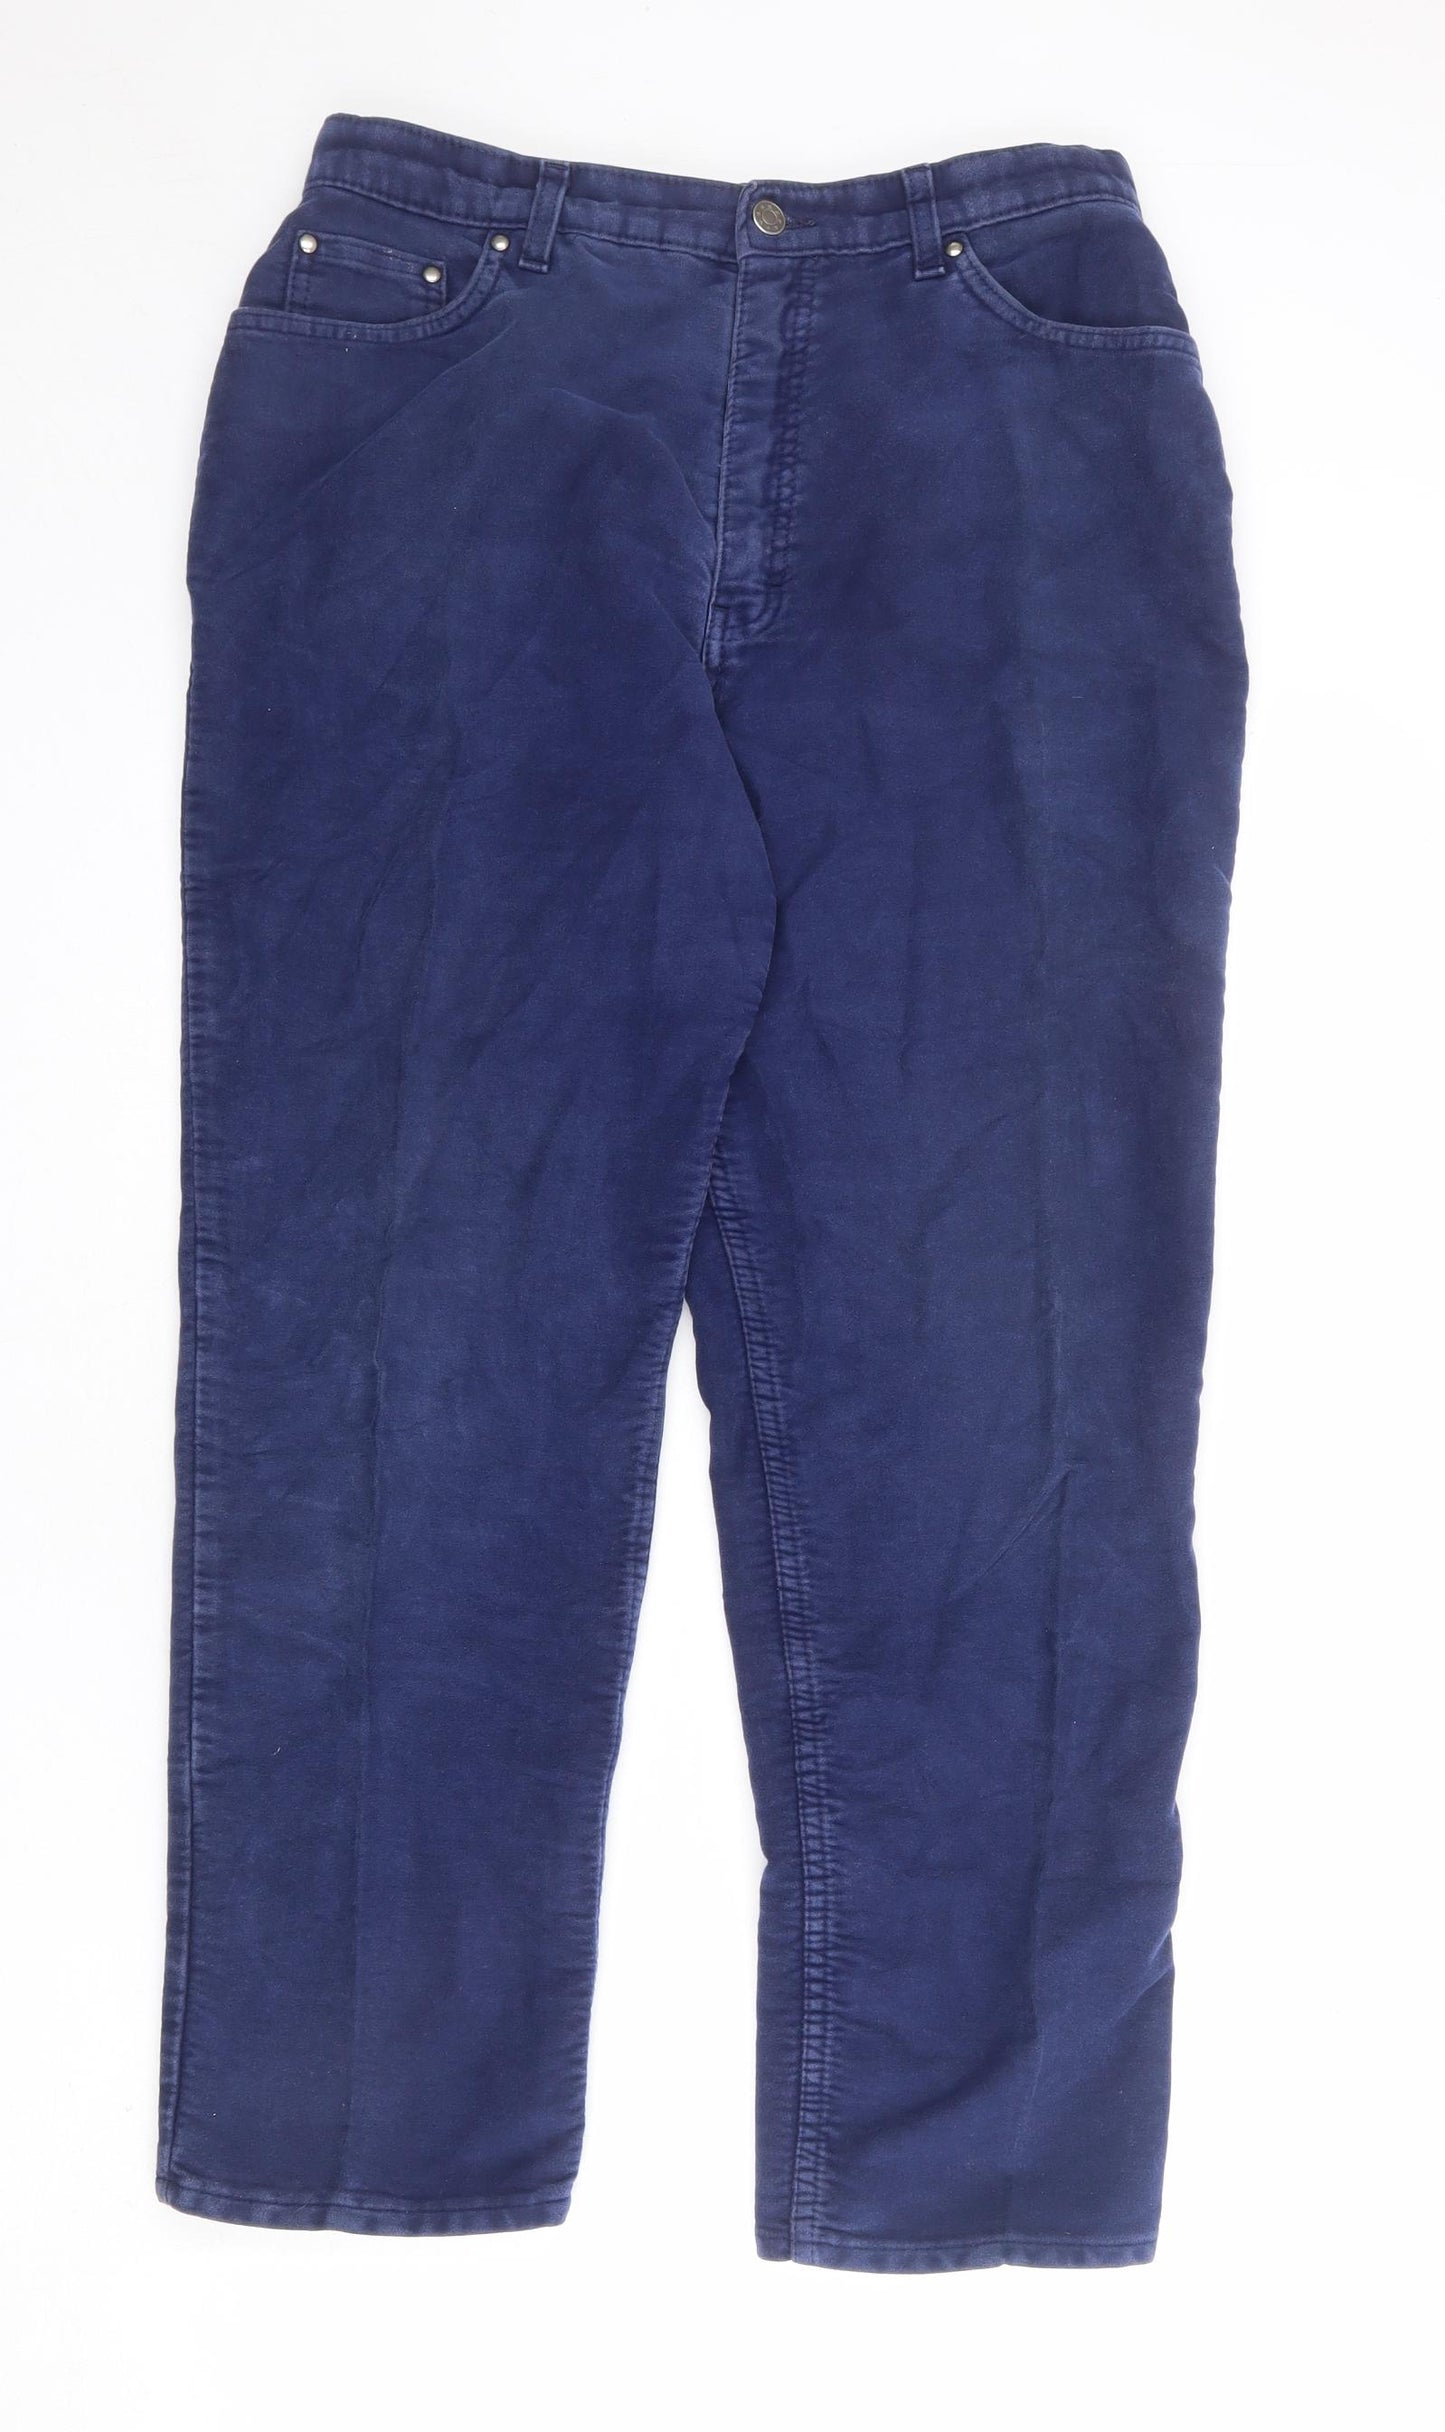 St Michael Womens Blue Cotton Trousers Size 16 L27 in Regular Zip